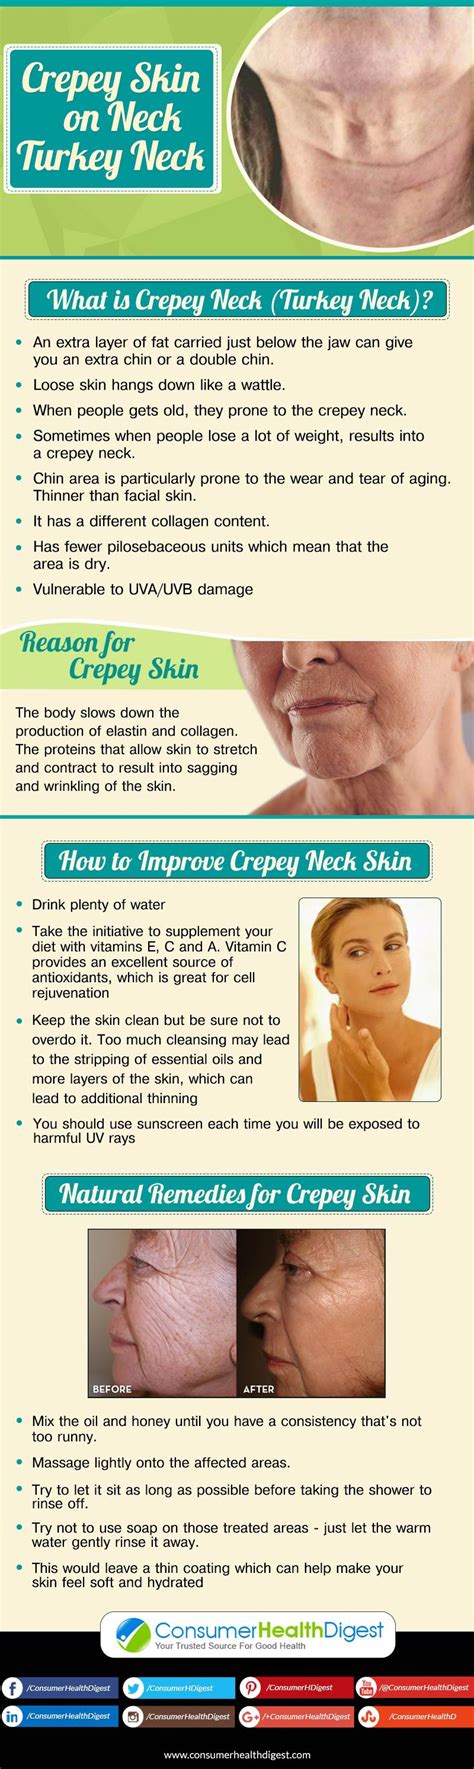 How To Improve Crepey Neck Skin